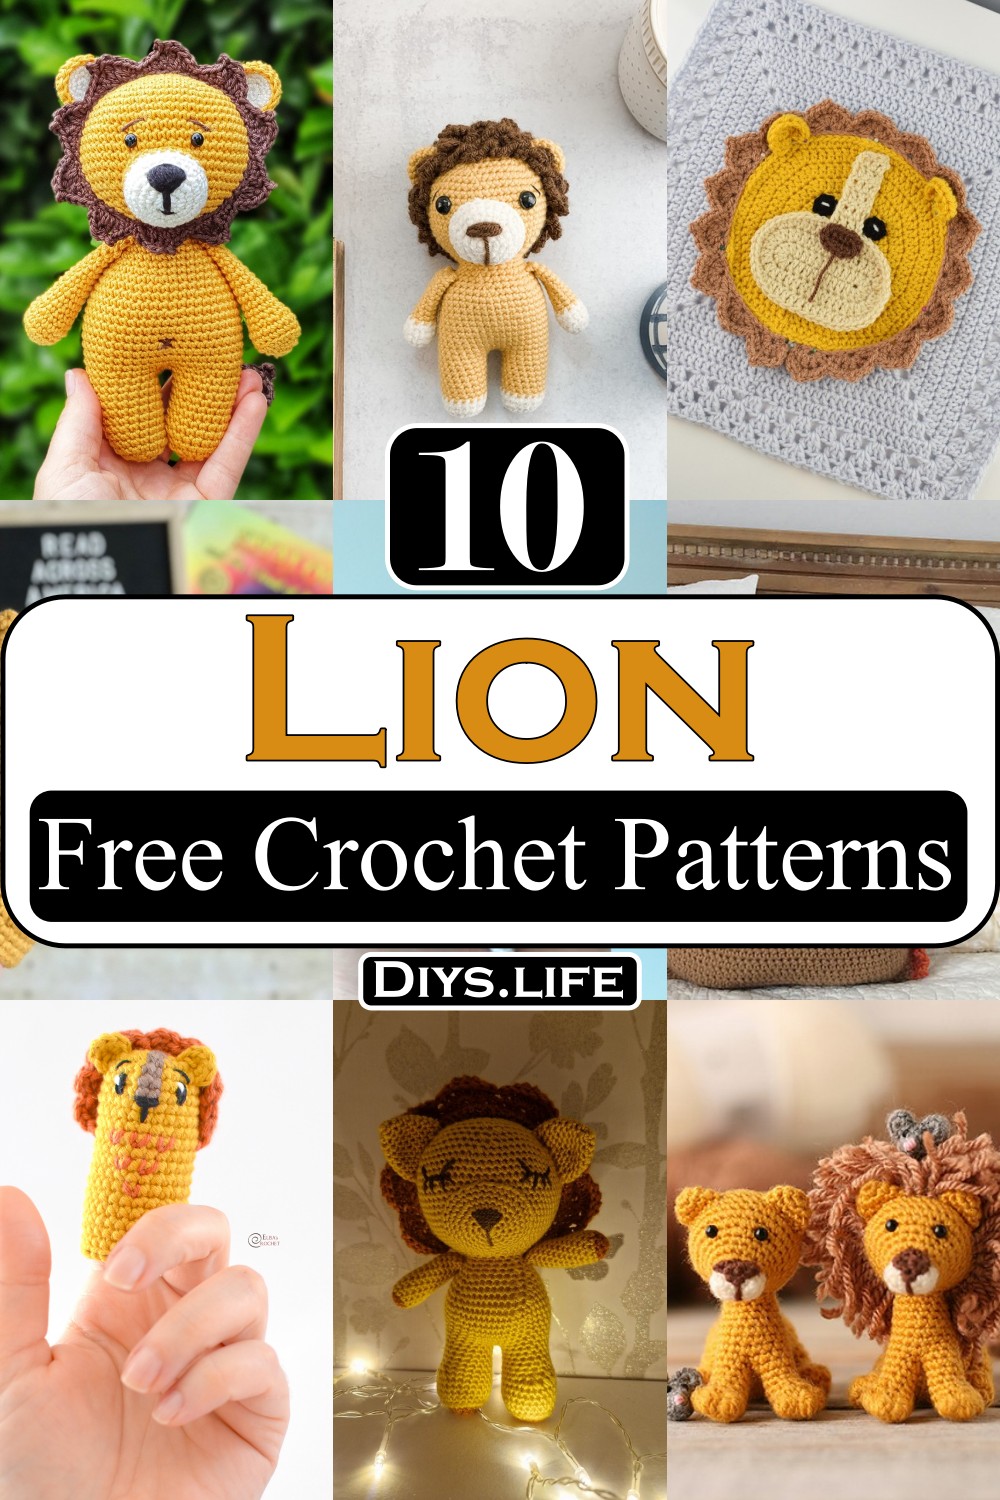 Crochet Lion Patterns